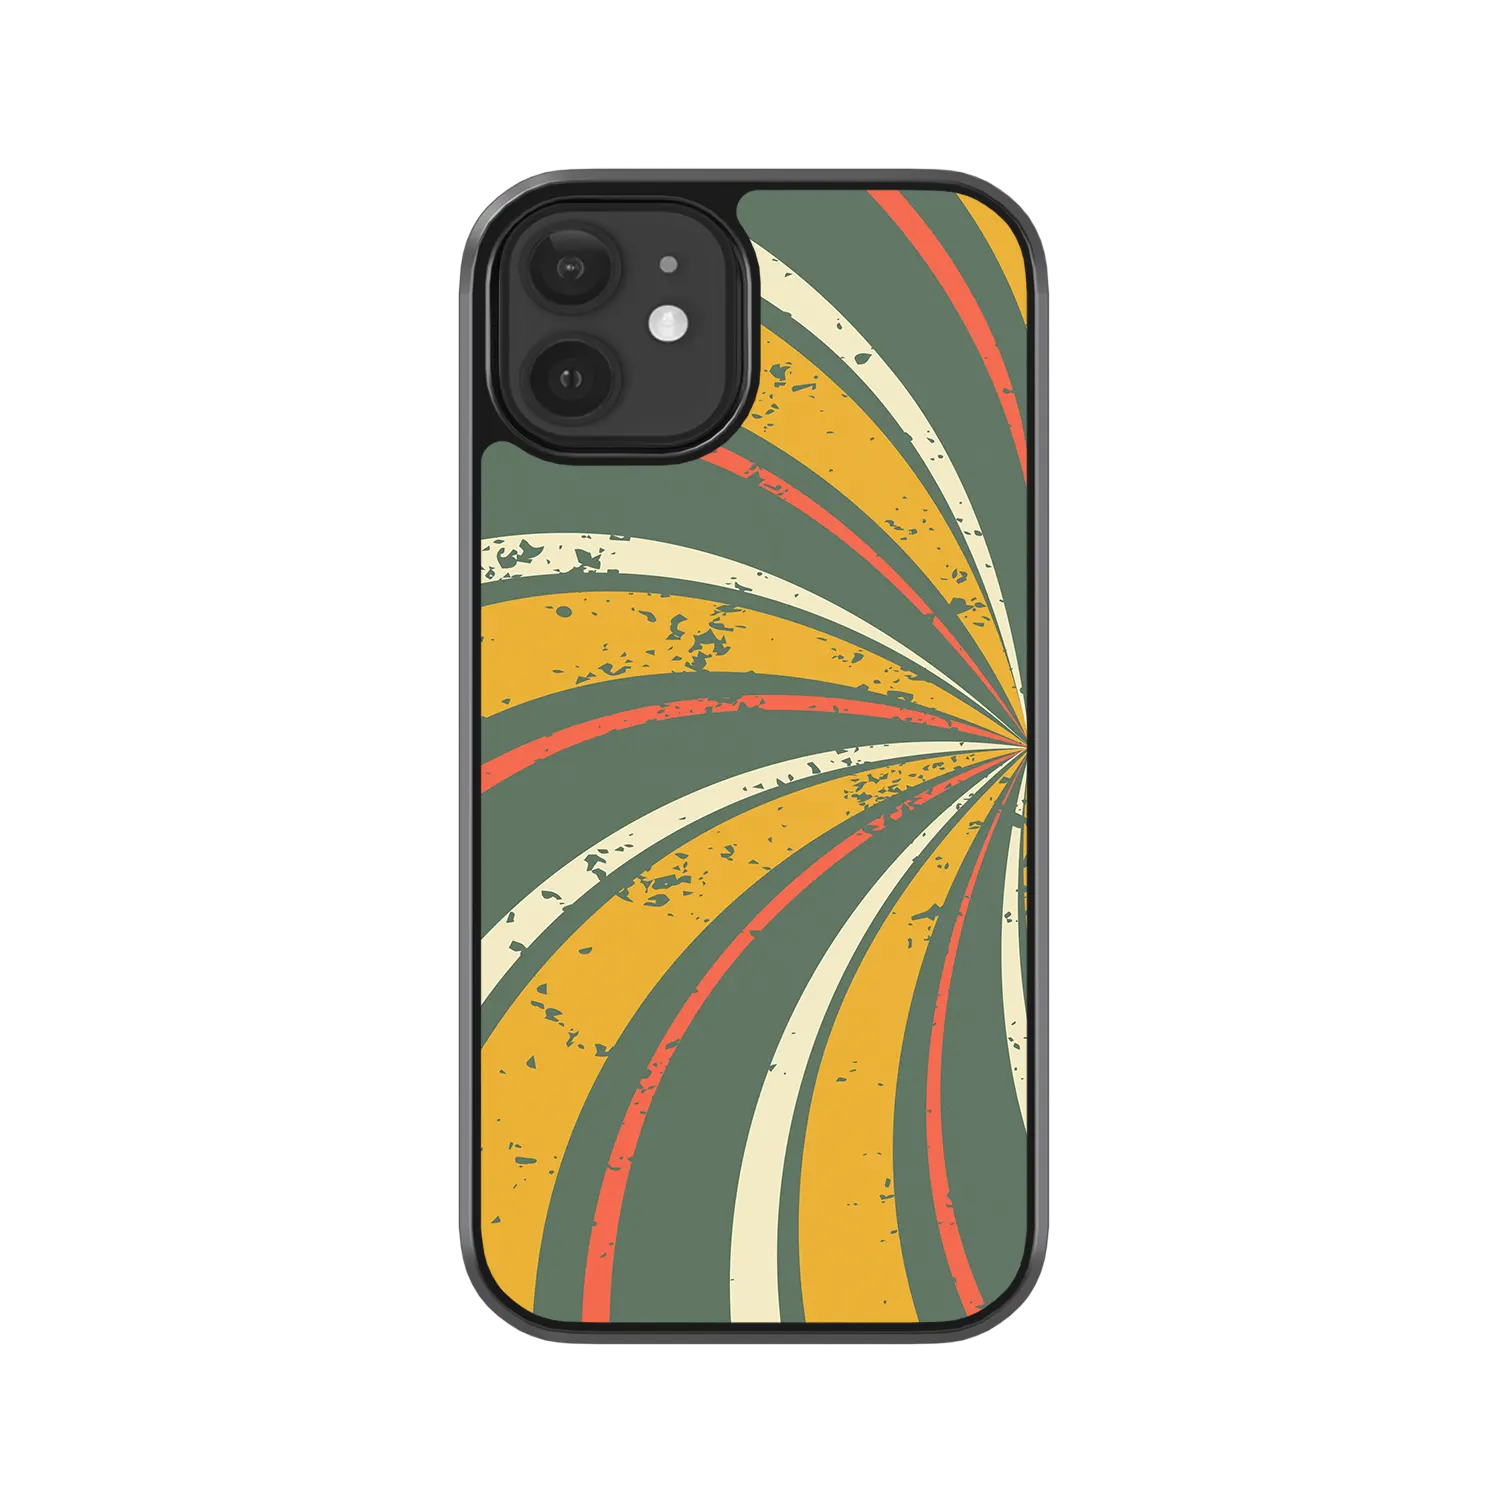 Retro Grunge iphone 11 case